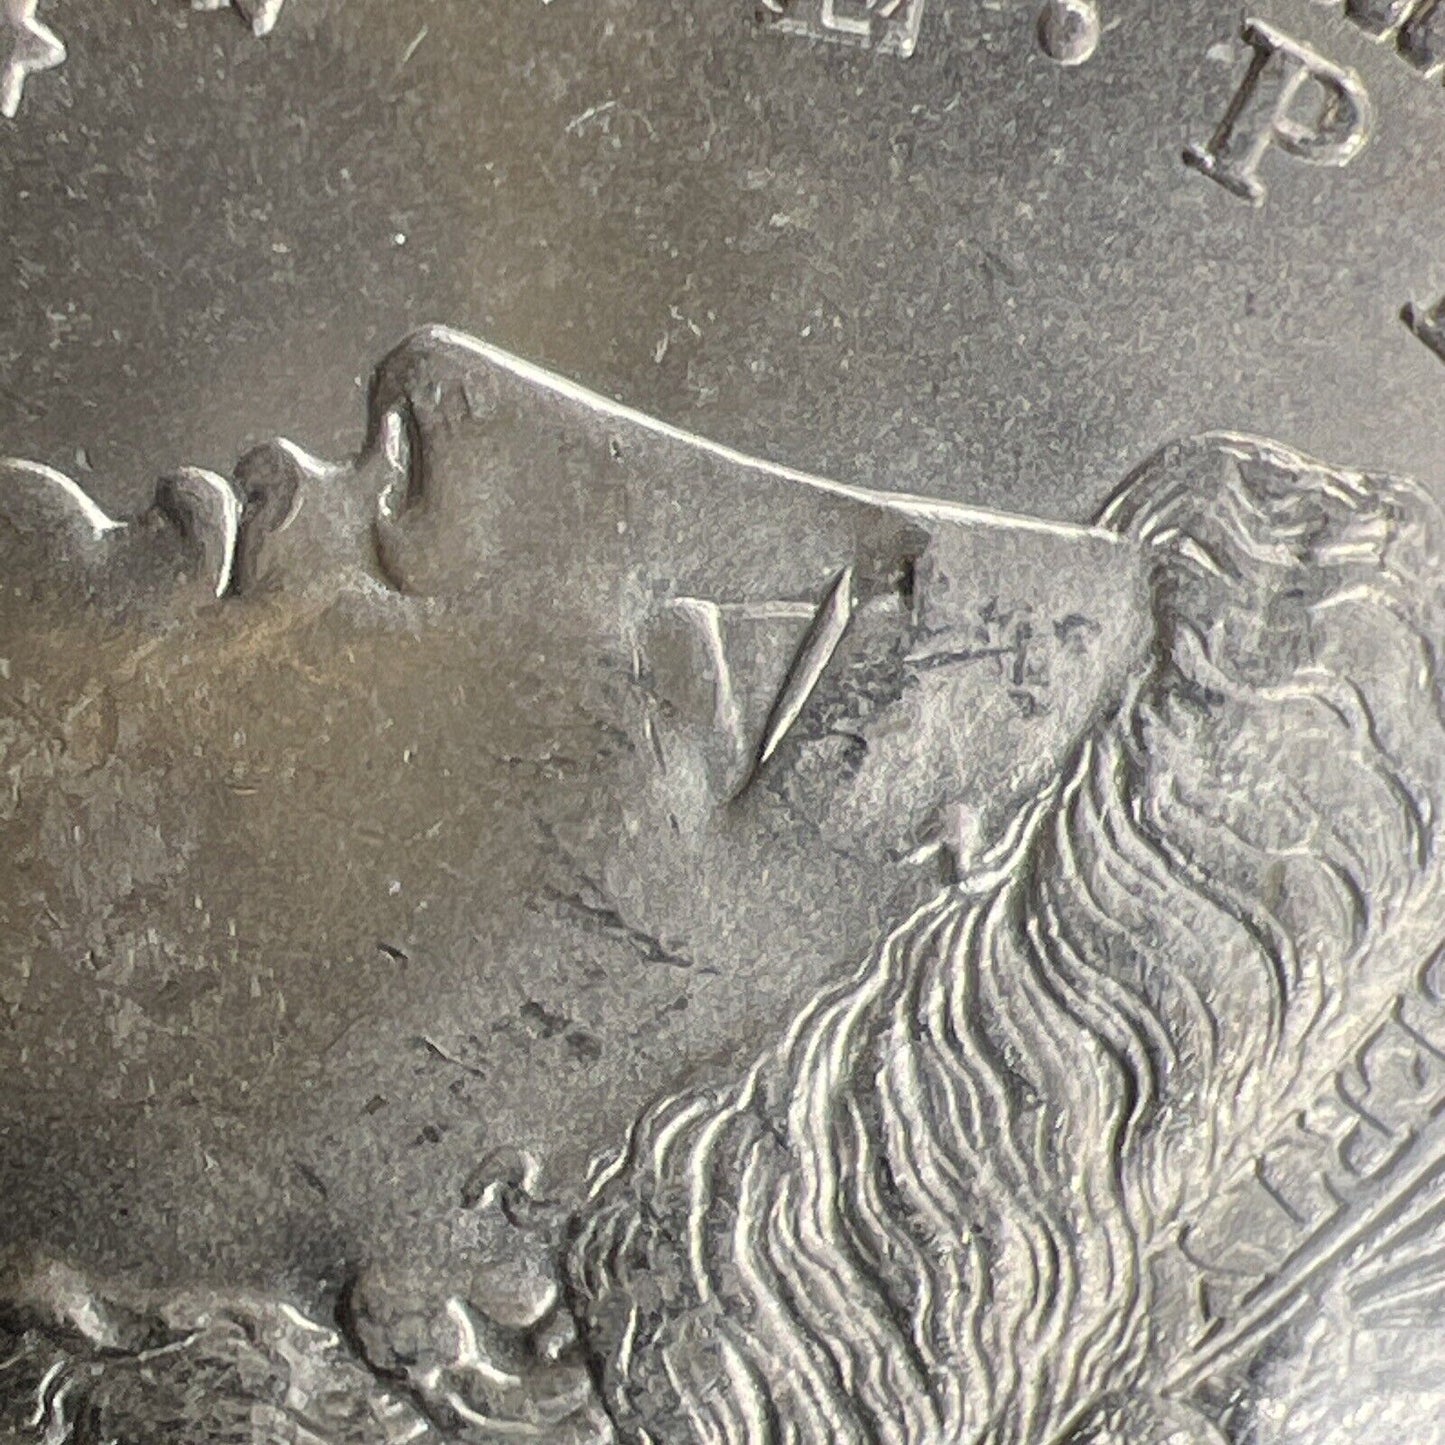 1887 P Morgan Silver Dollar Coin BU UNC Alligator EYE VAM-12 VARIETY VAM